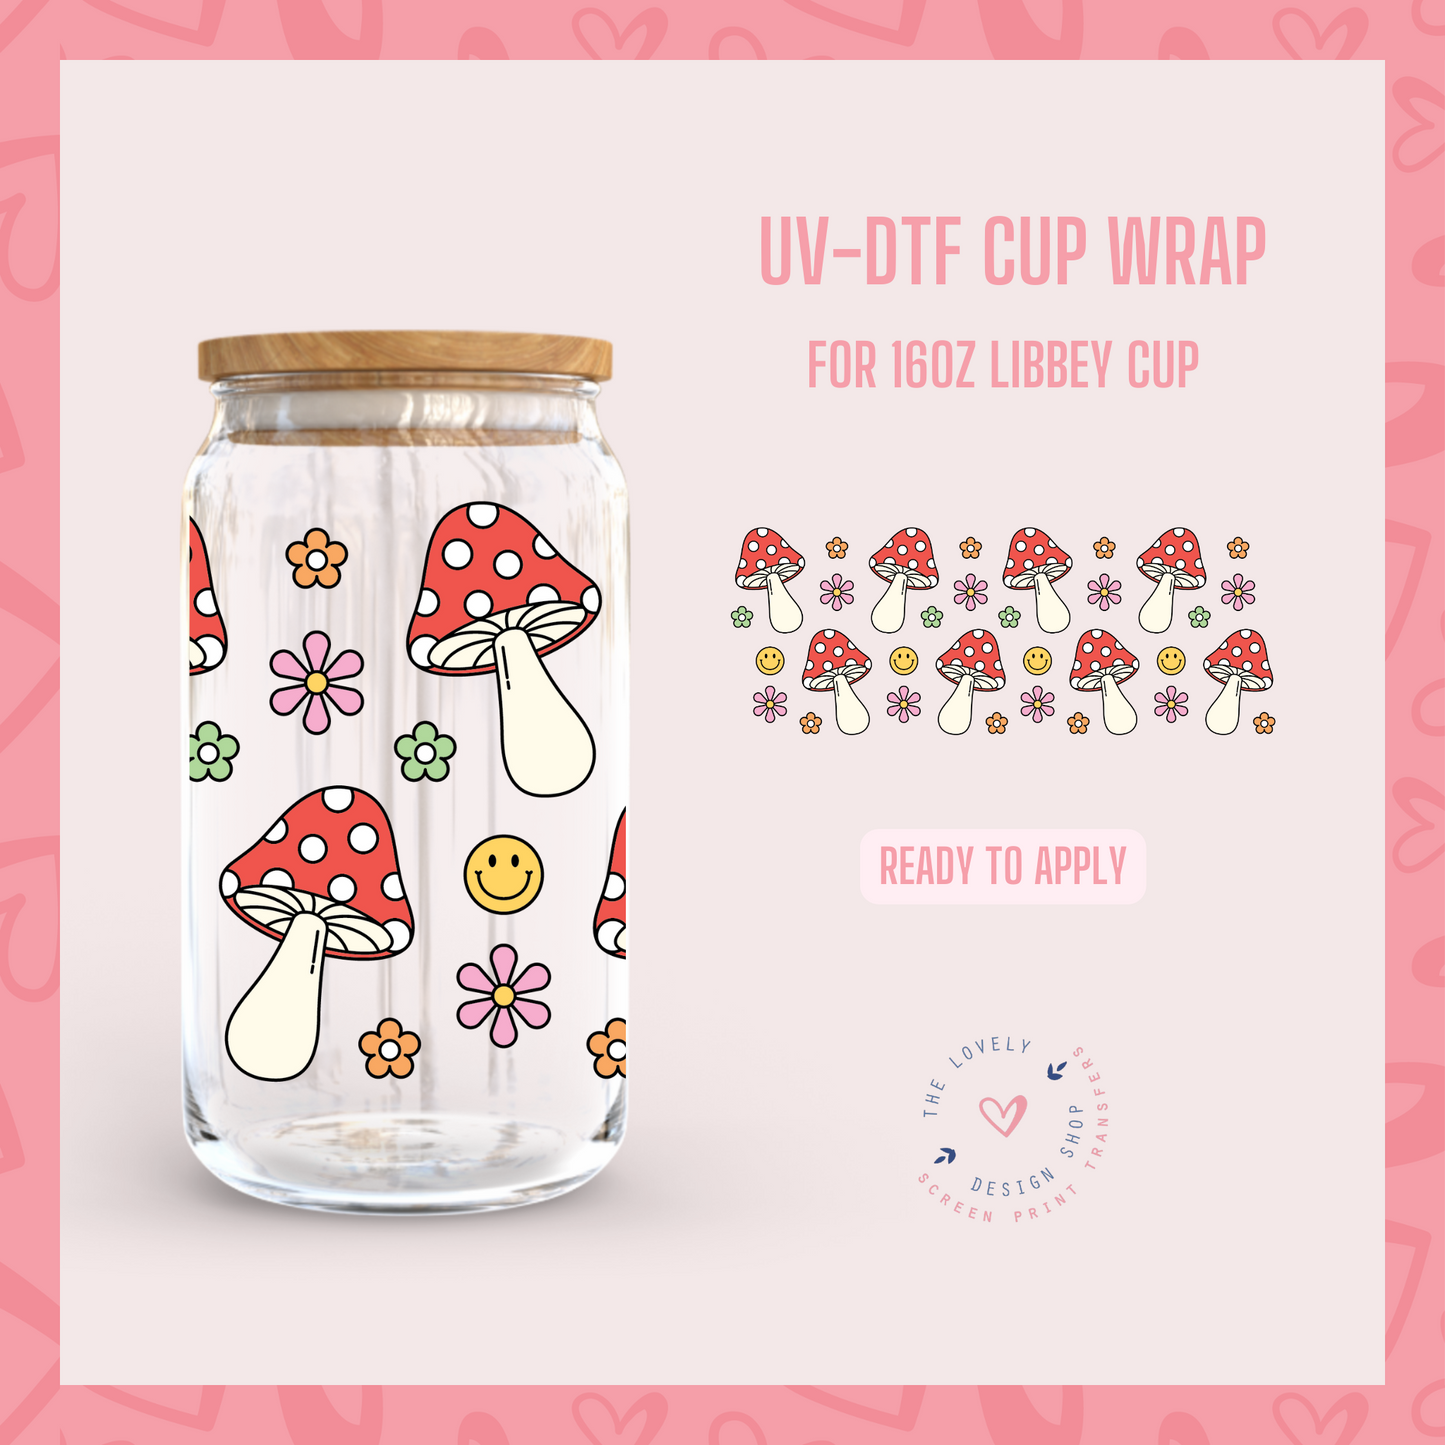 Mush + Flowers + Smiles - UV DTF 16 oz Libbey Cup Wrap (Ready to Ship) Feb 27